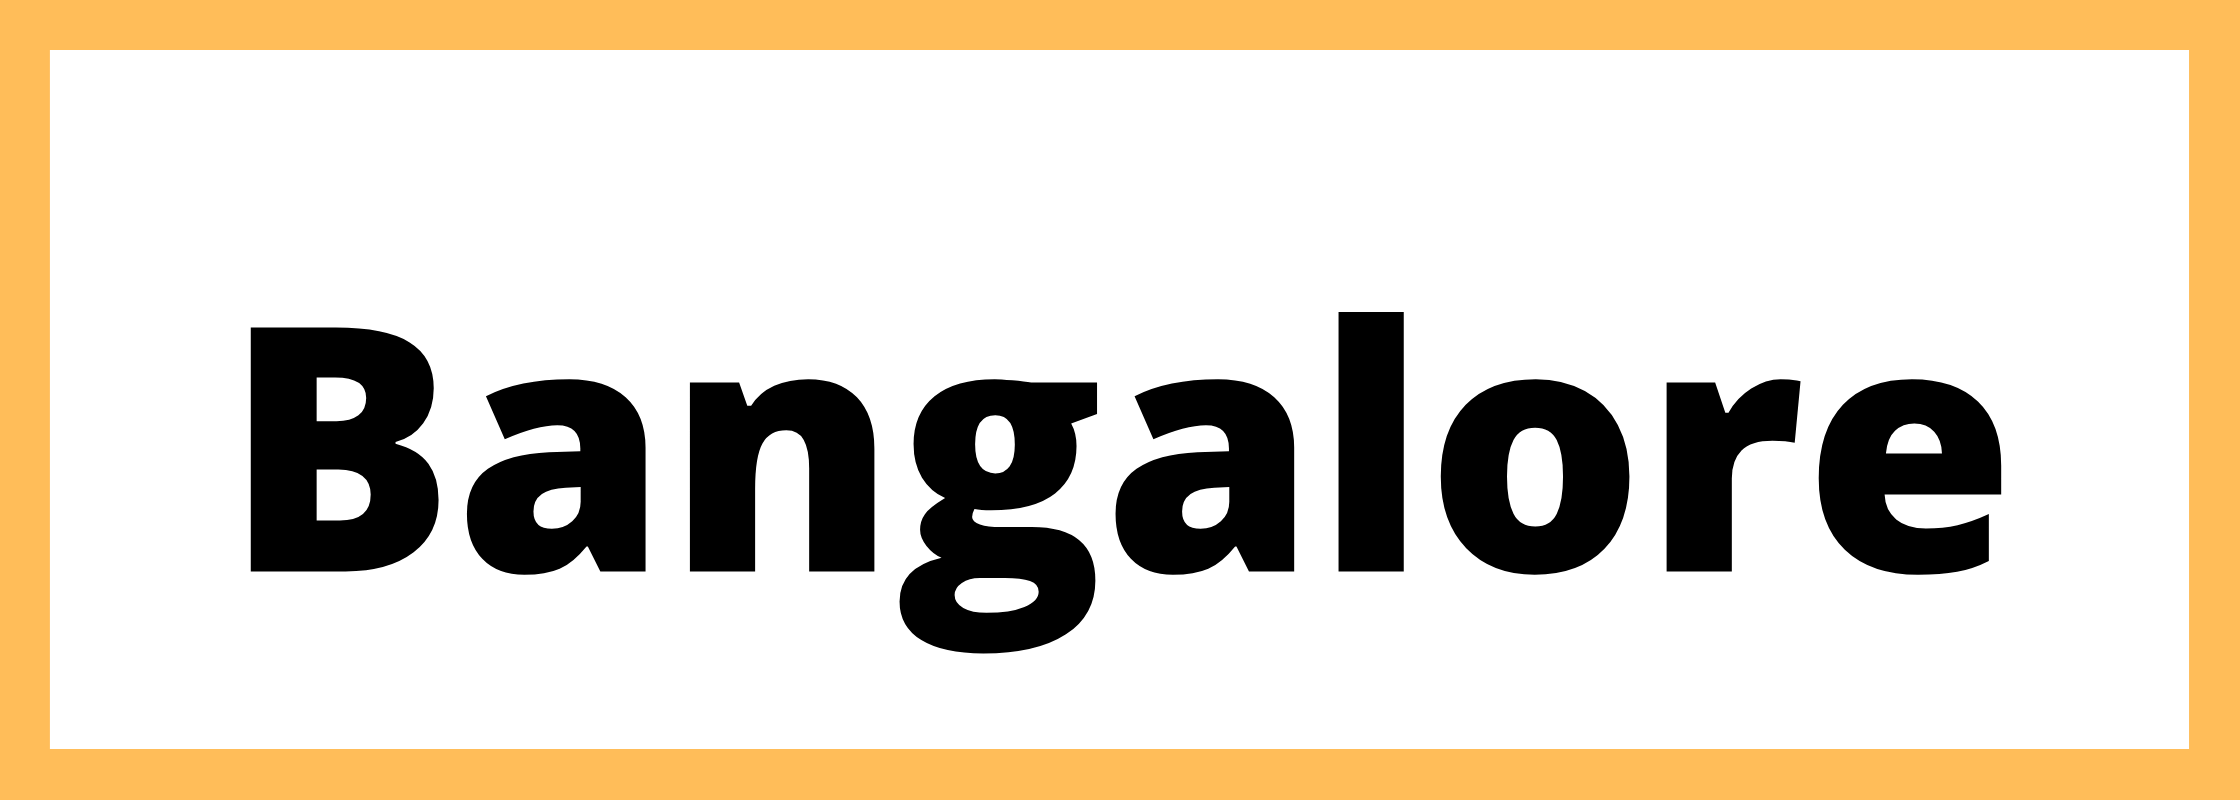 बैंगलोर-Bangalore-mandi-bhav